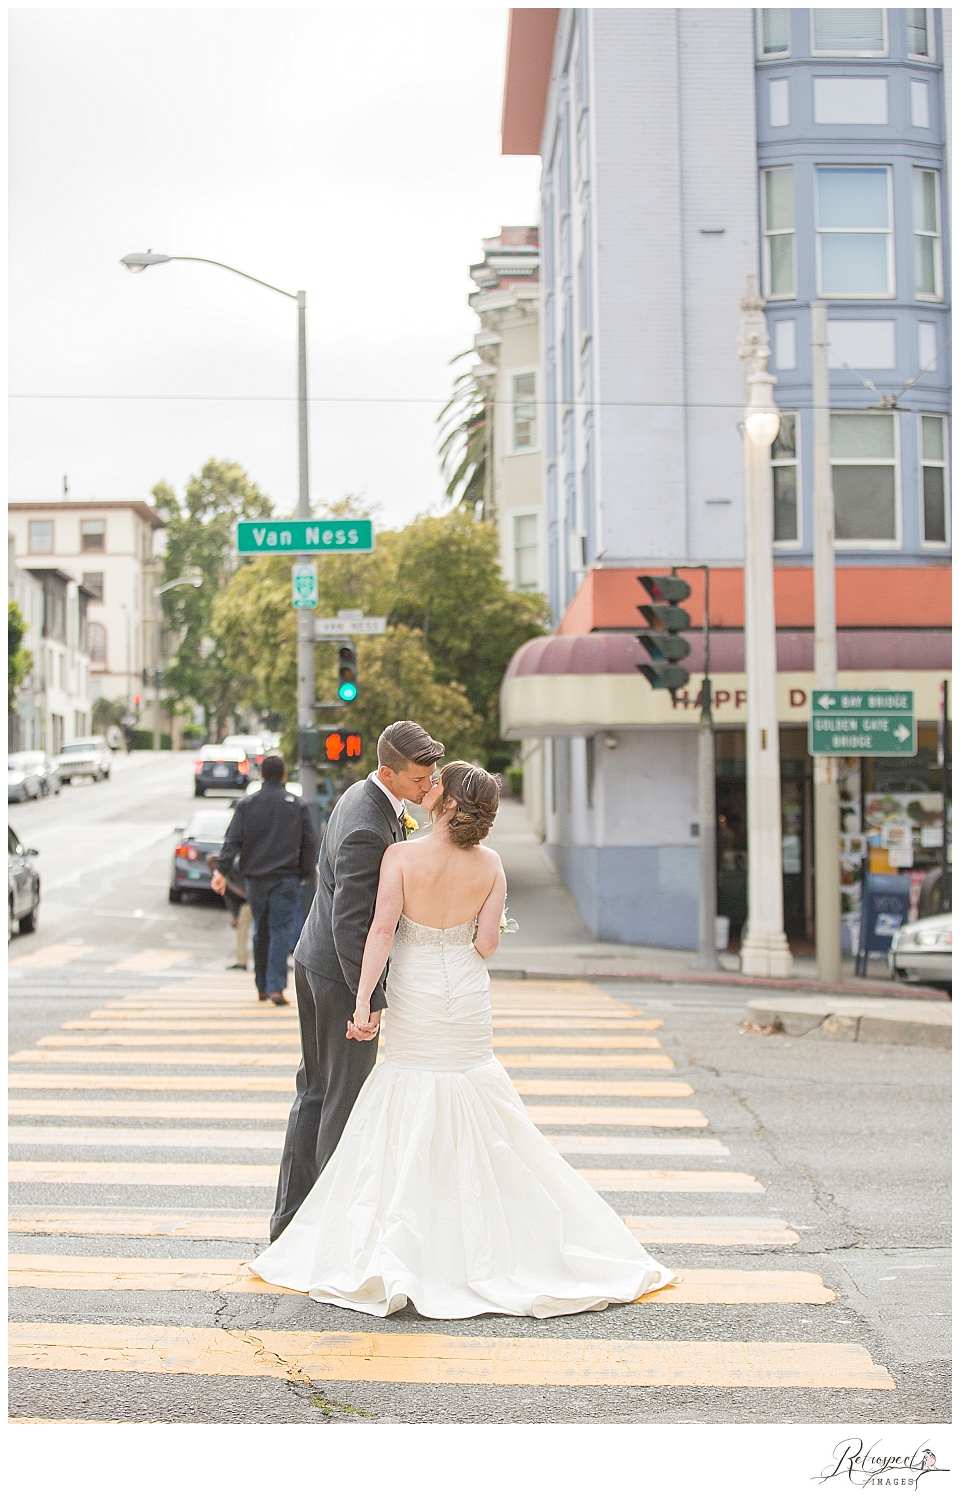 Emily + DJ, Firehouse 8 Wedding | San Francisco Wedding Photography ...